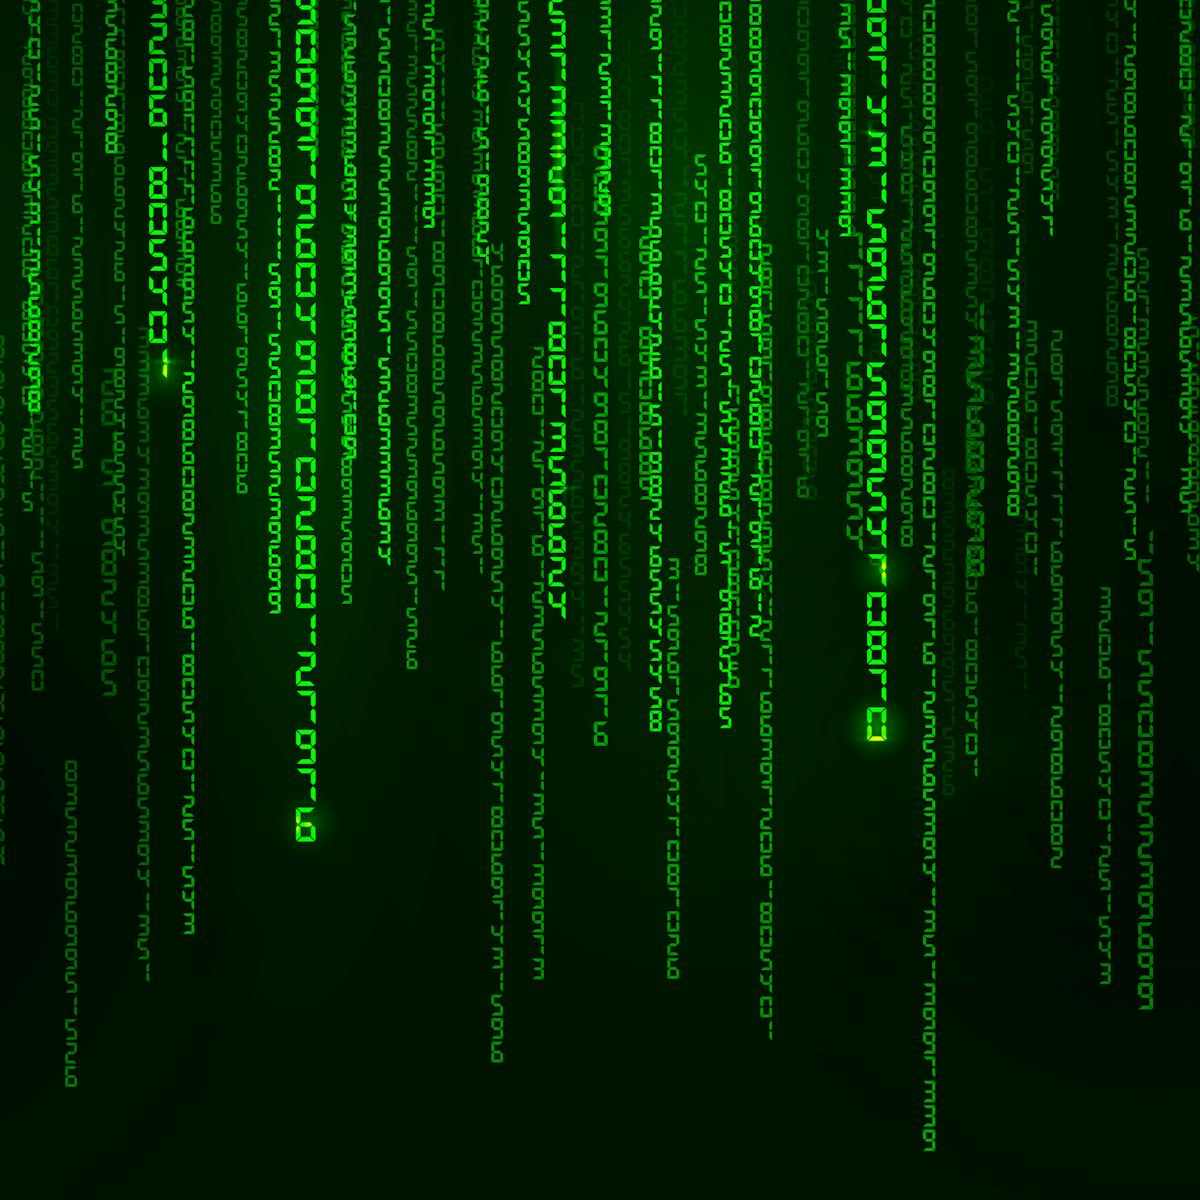 The Matrix: how conspiracy pill' philosophy